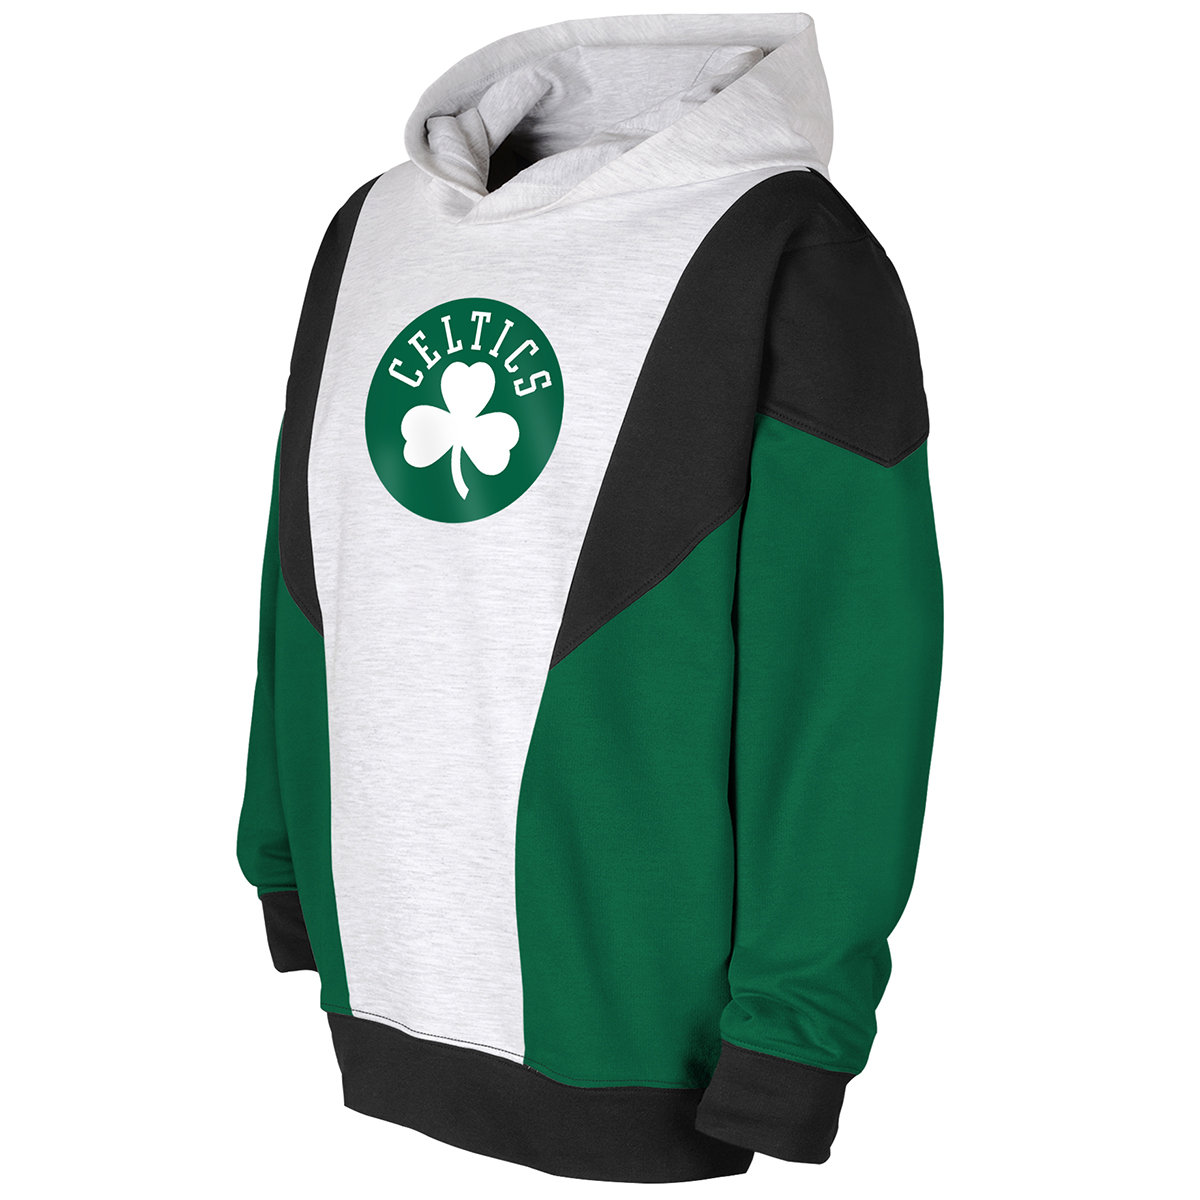 Boston Celtics Kids' Outerstuff Champion League Fleece Pullover Hoodie